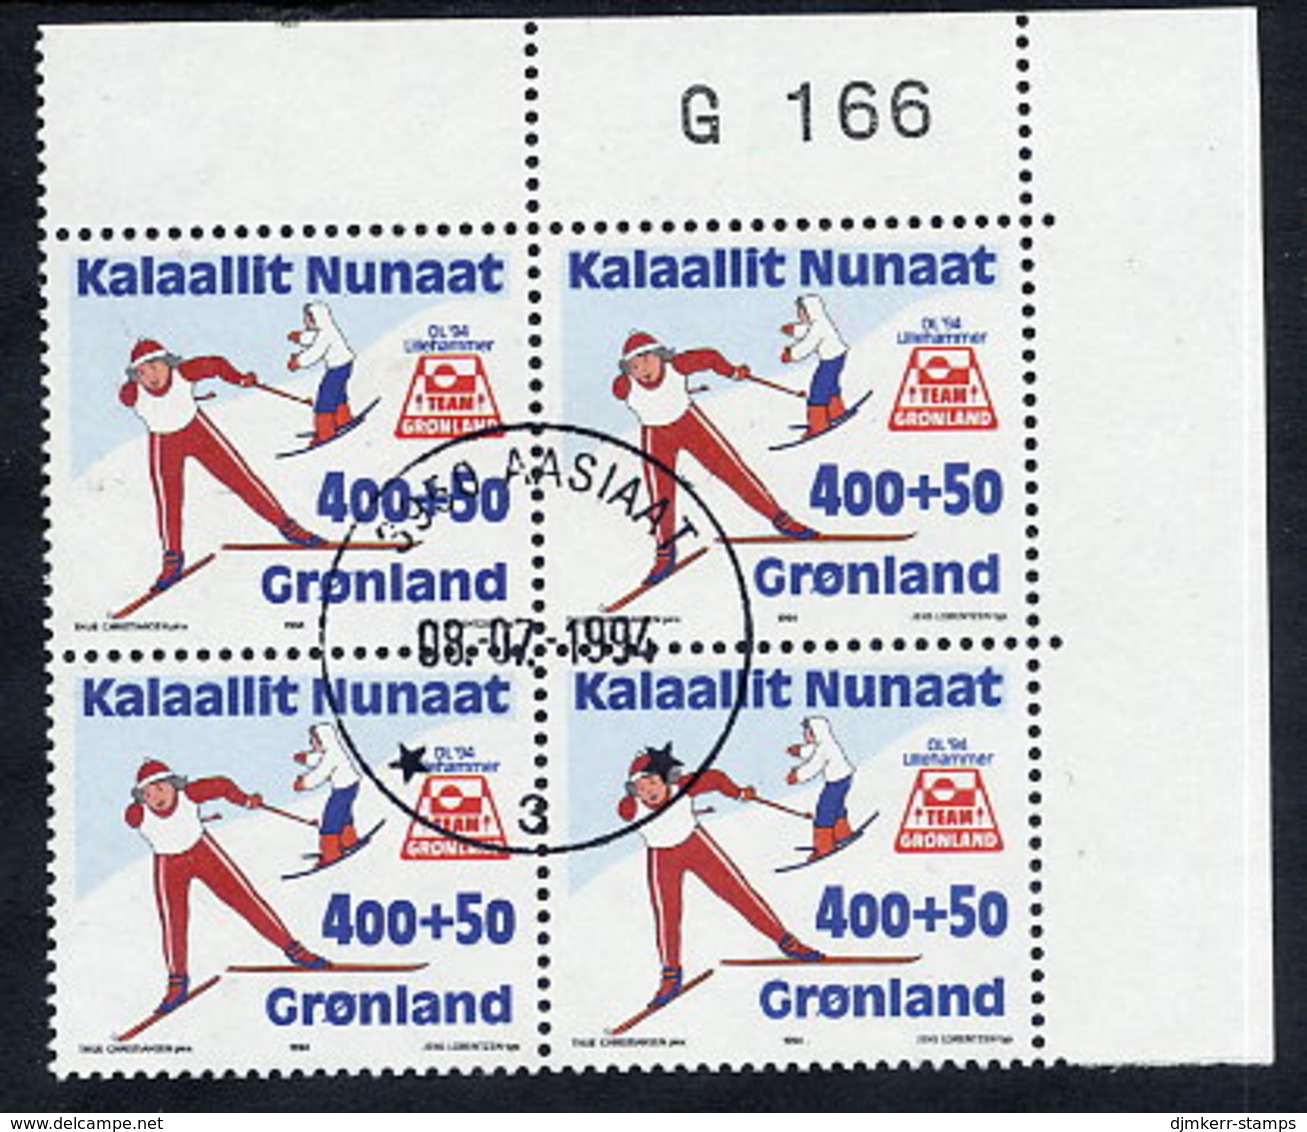 GREENLAND 1994 Winter Olympic Games. In Used Corner Block Of 4,  Michel 243 - Gebraucht